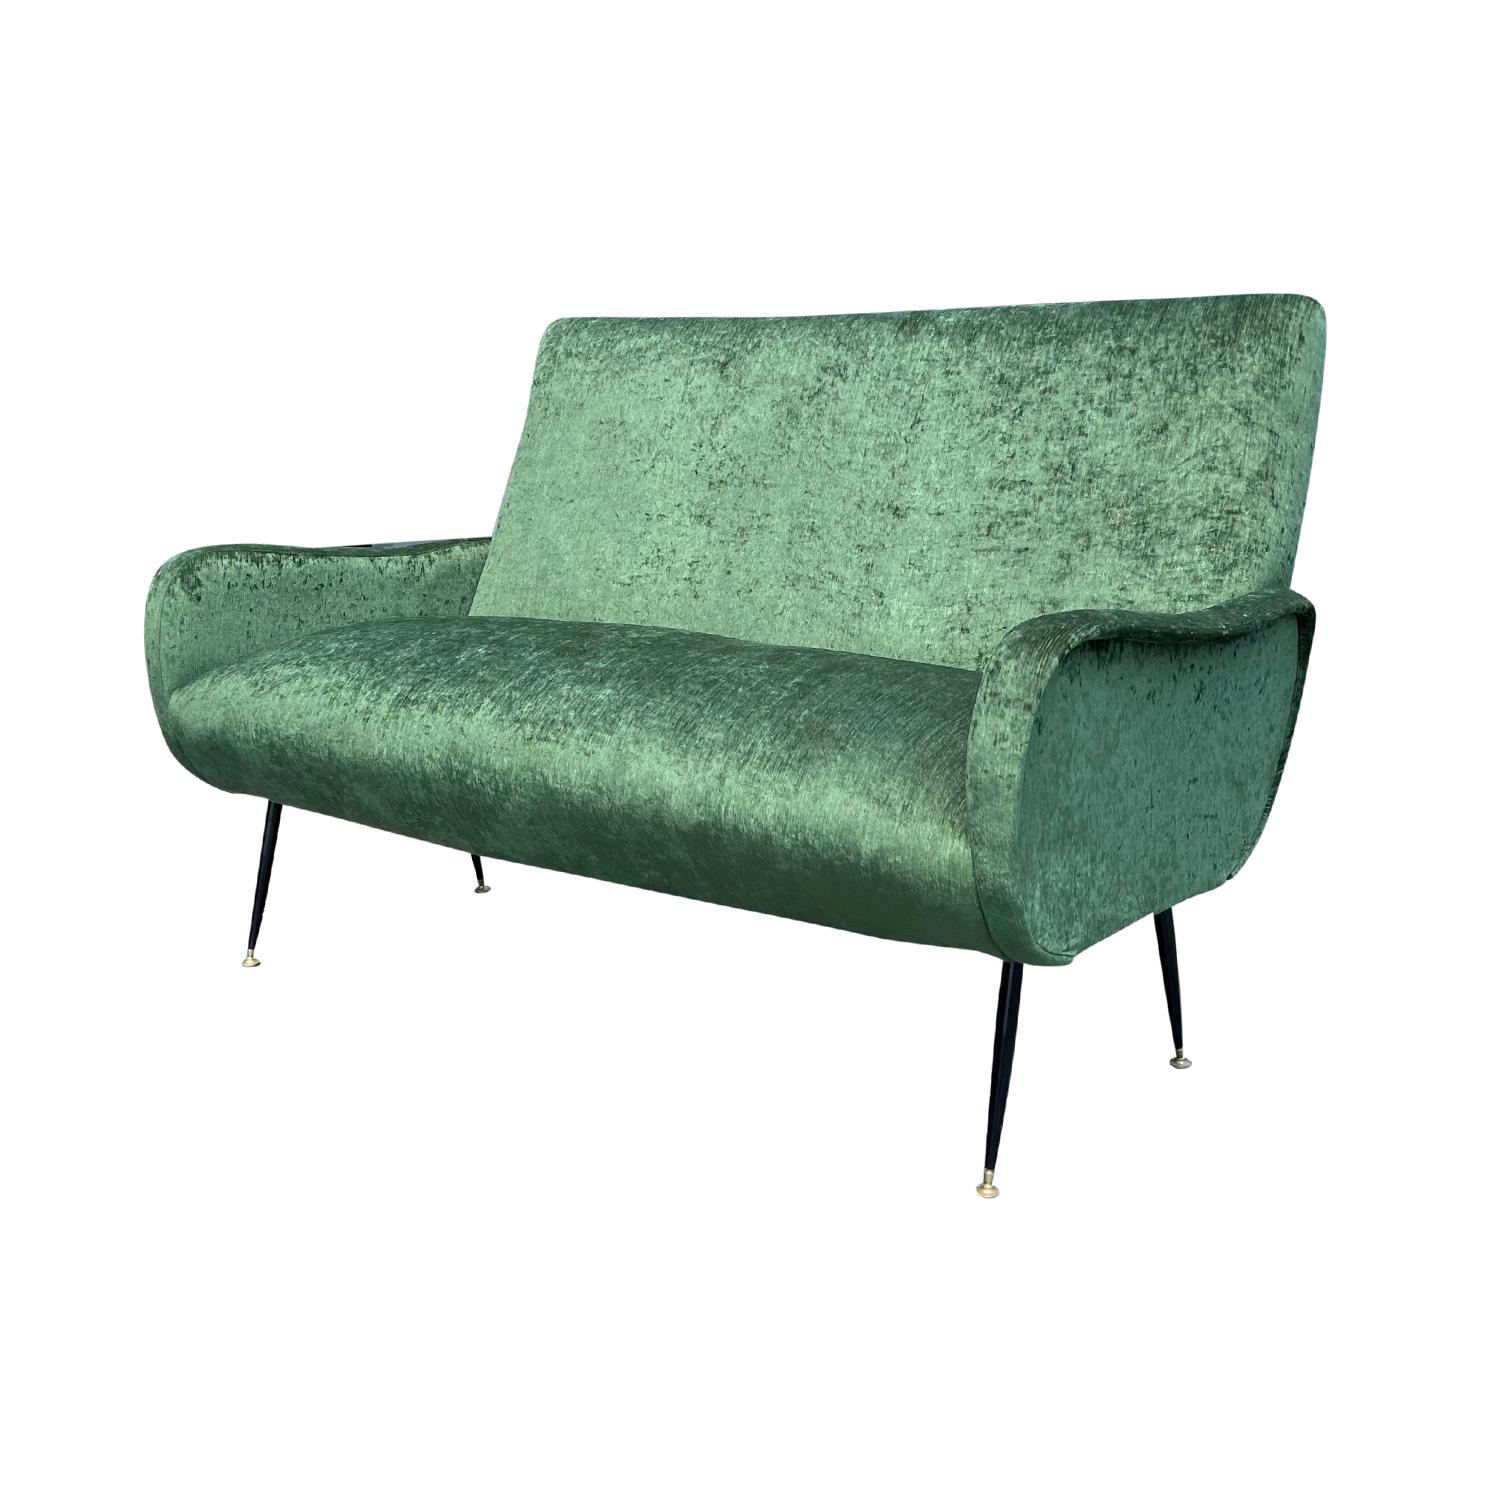 green two seater sofa